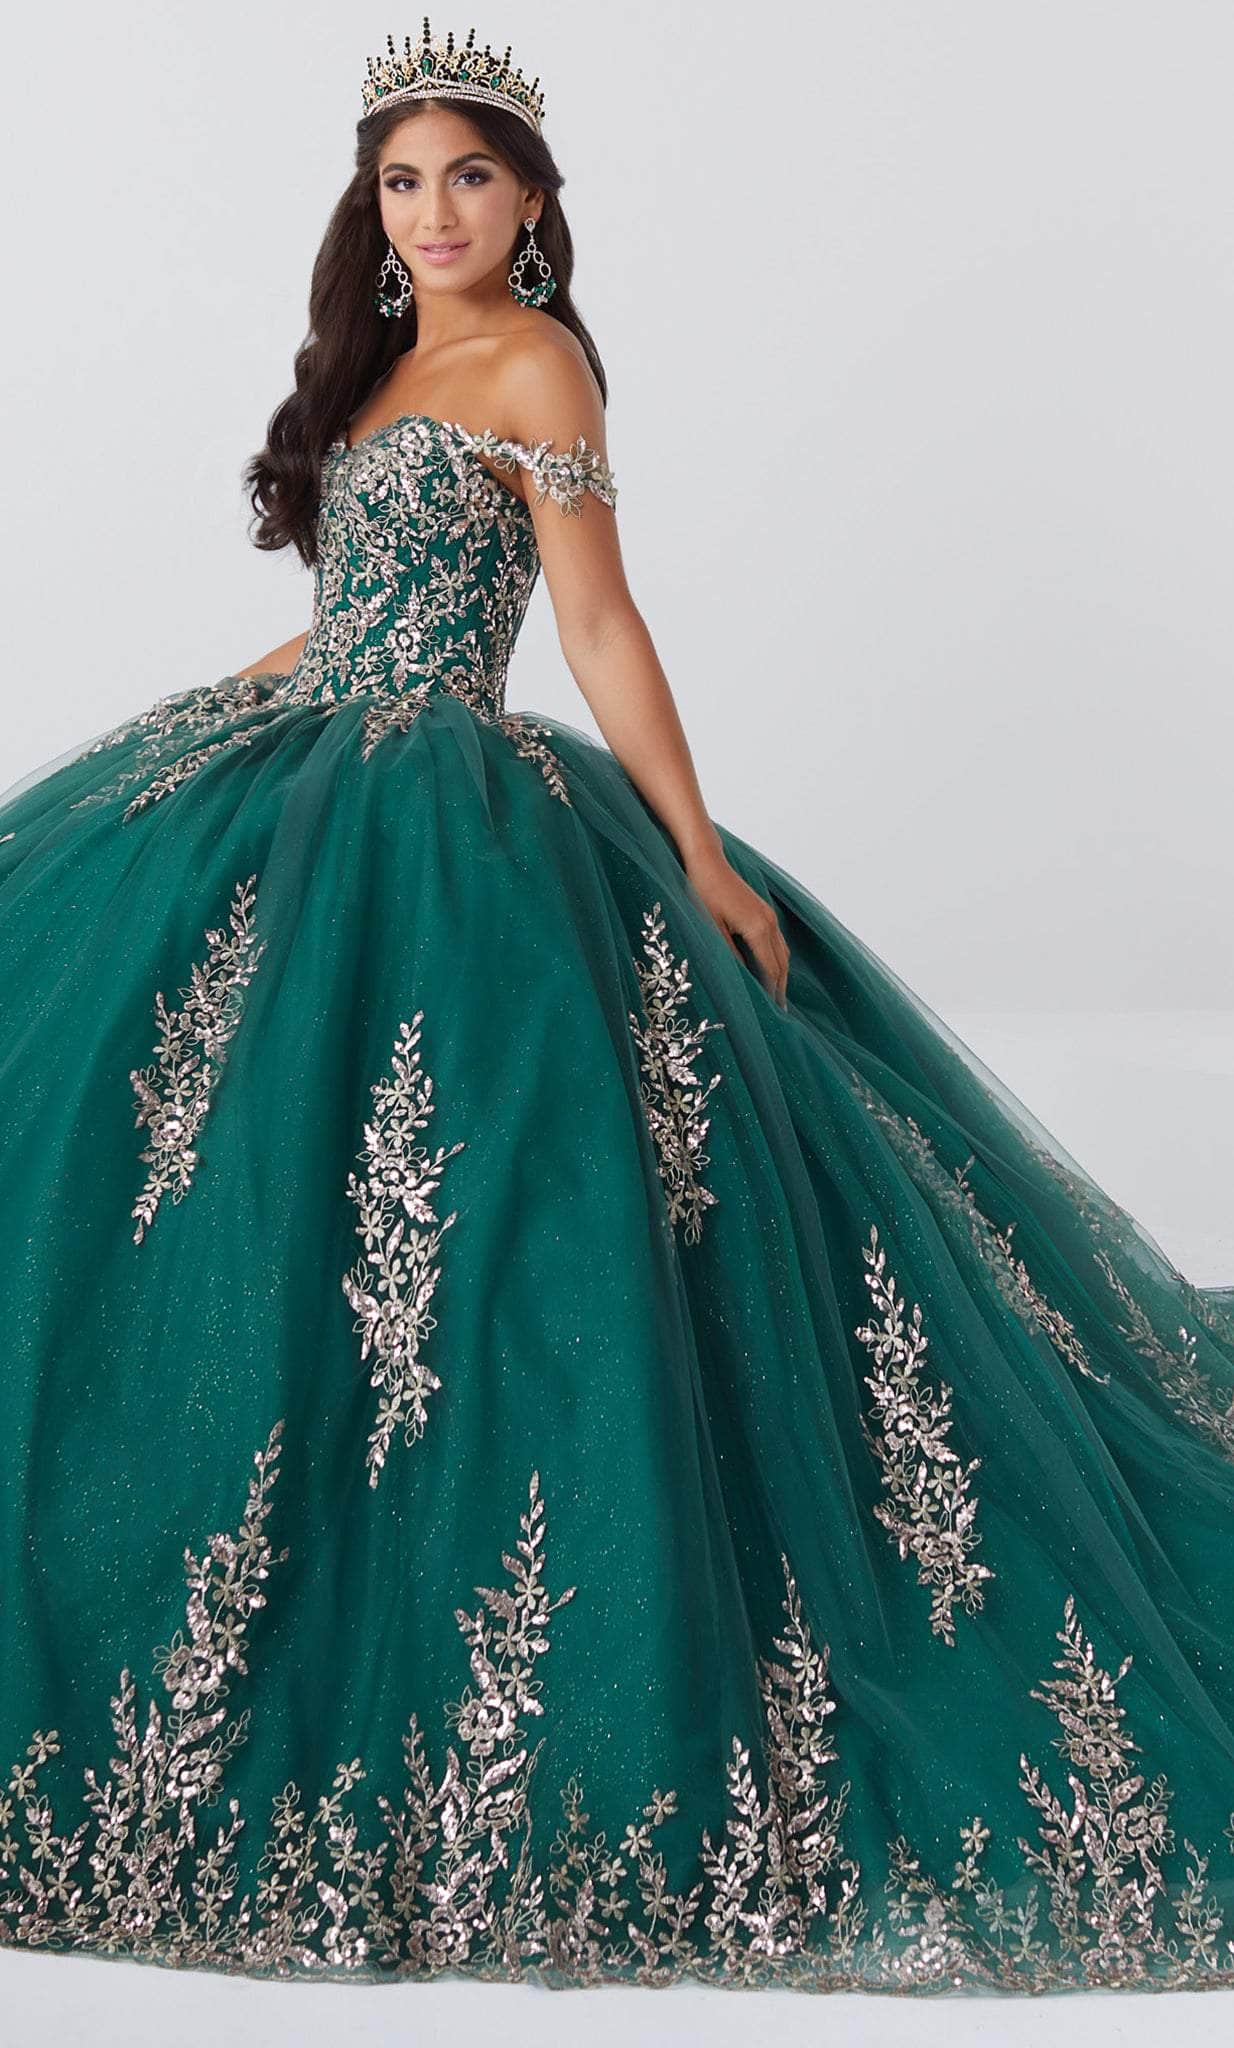 Fiesta Gowns 56466 - Embellished Glittery Tulle Voluminous Dress
